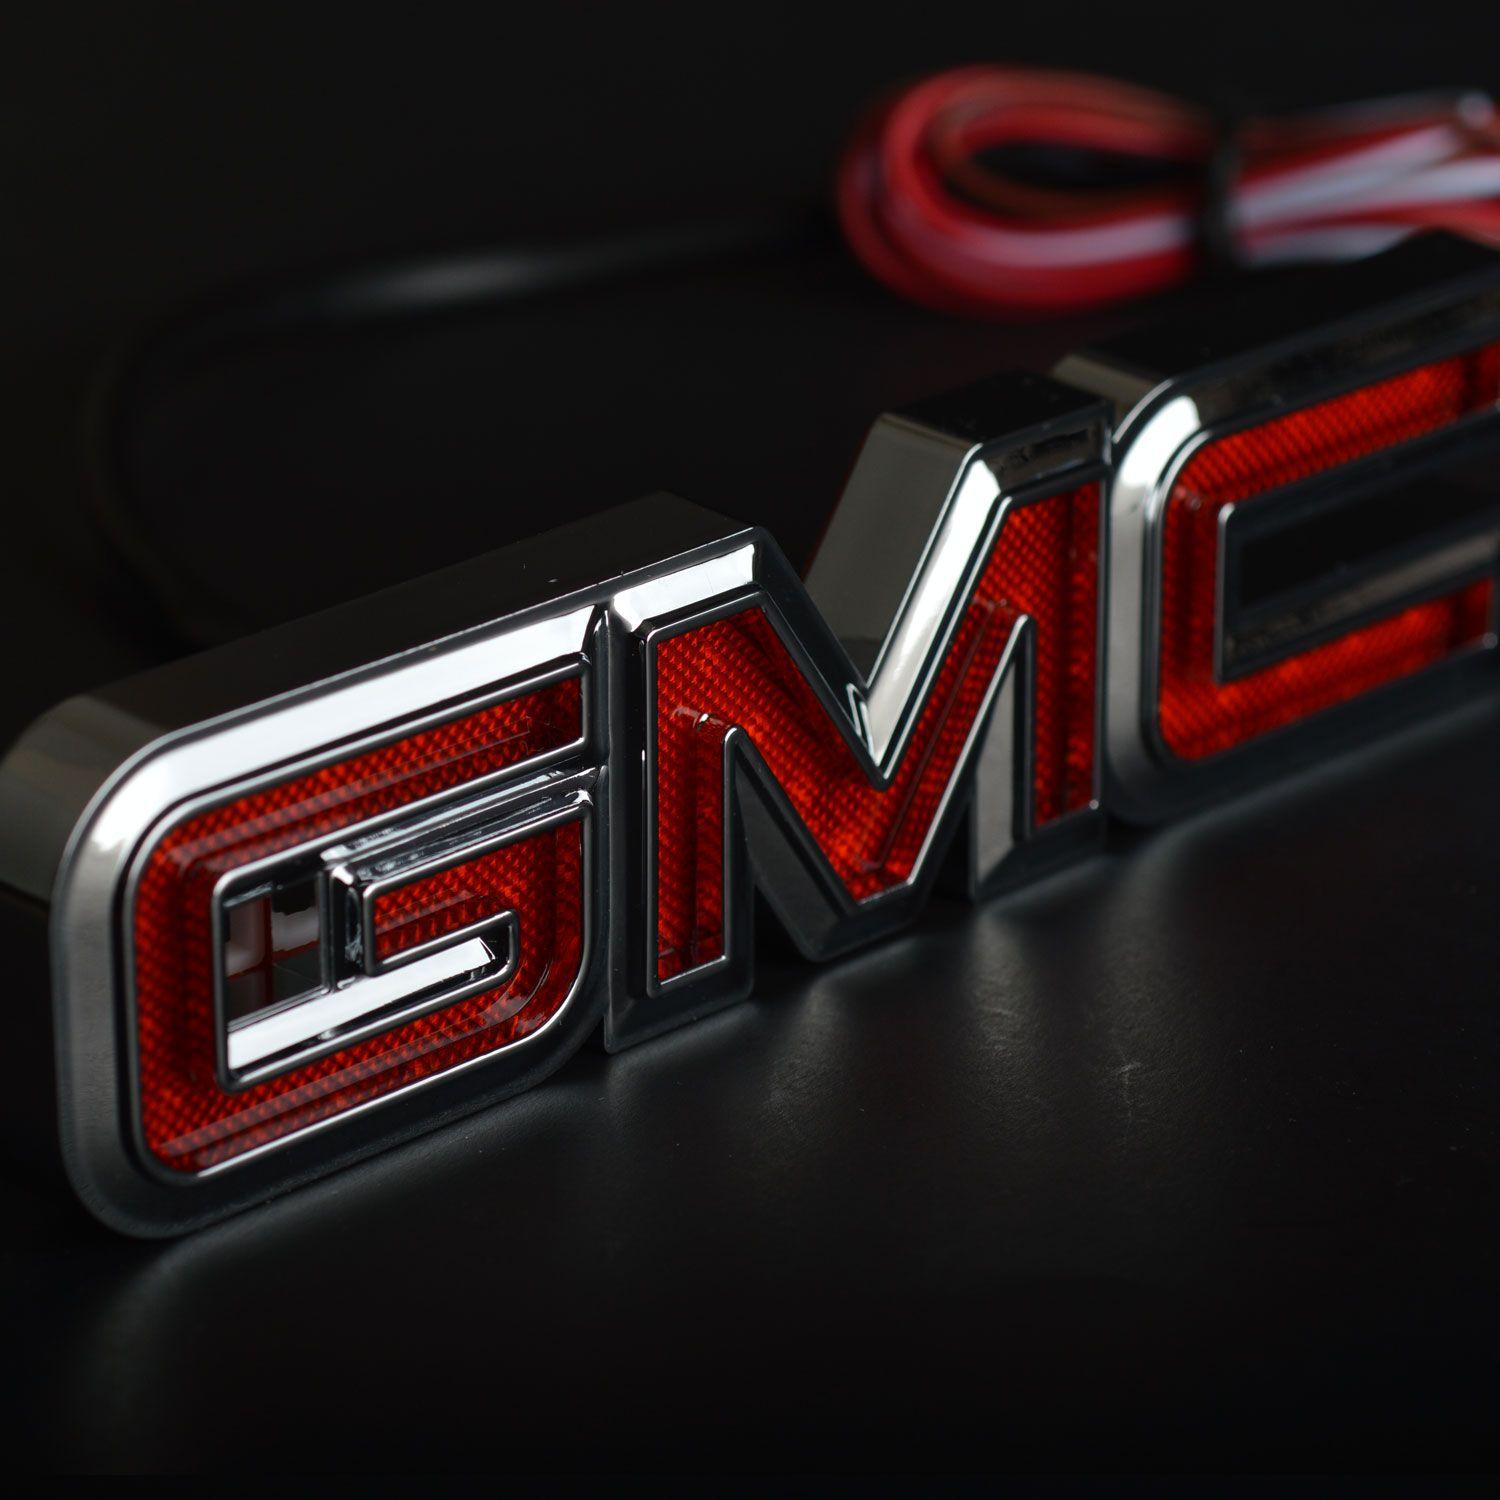 Gmc logo light